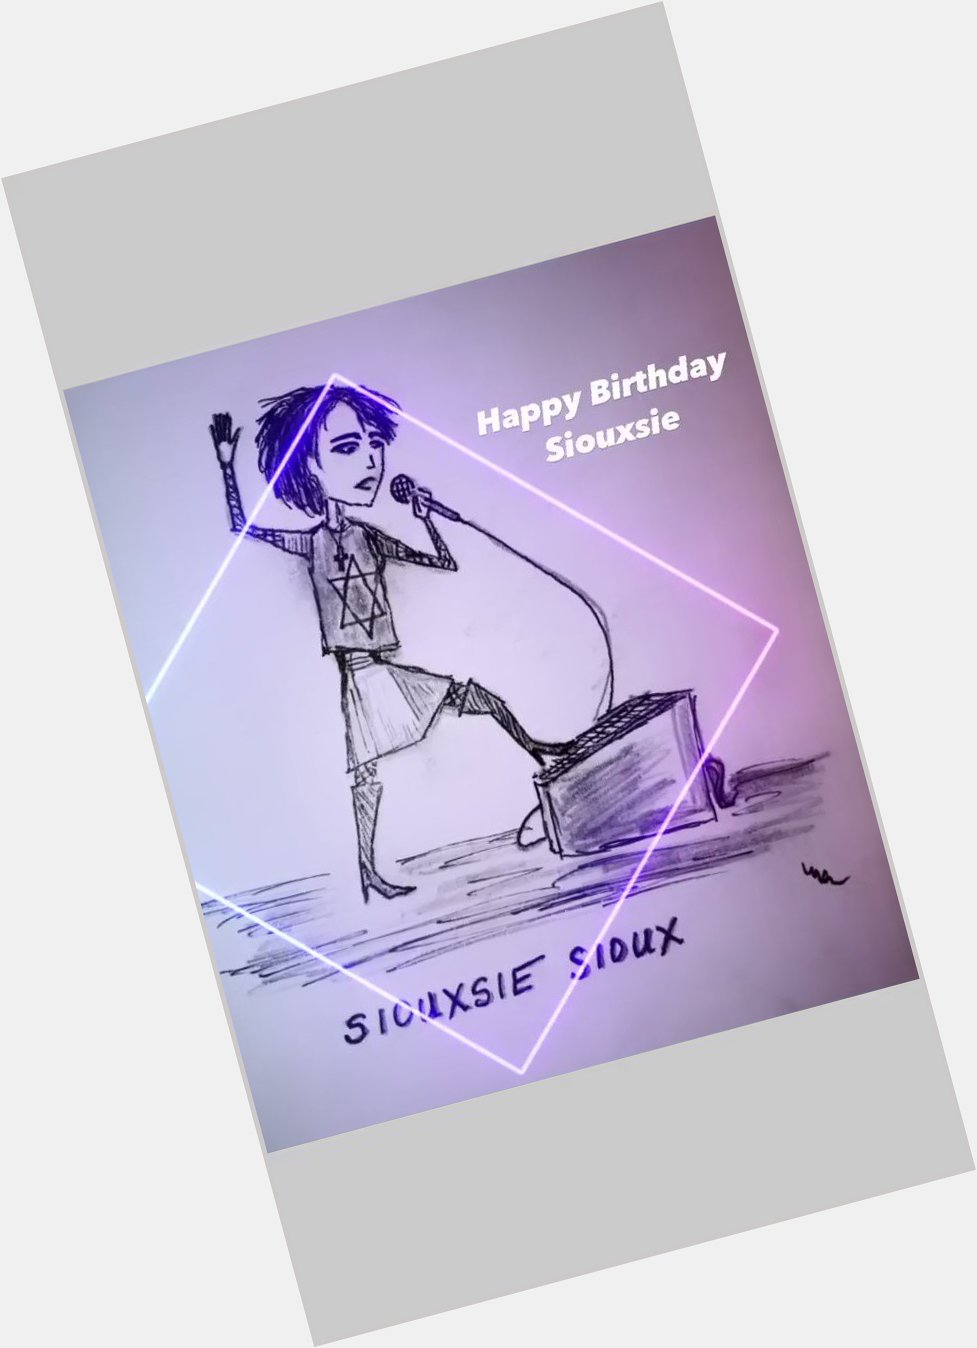 Happy Birthday Siouxsie Sioux   